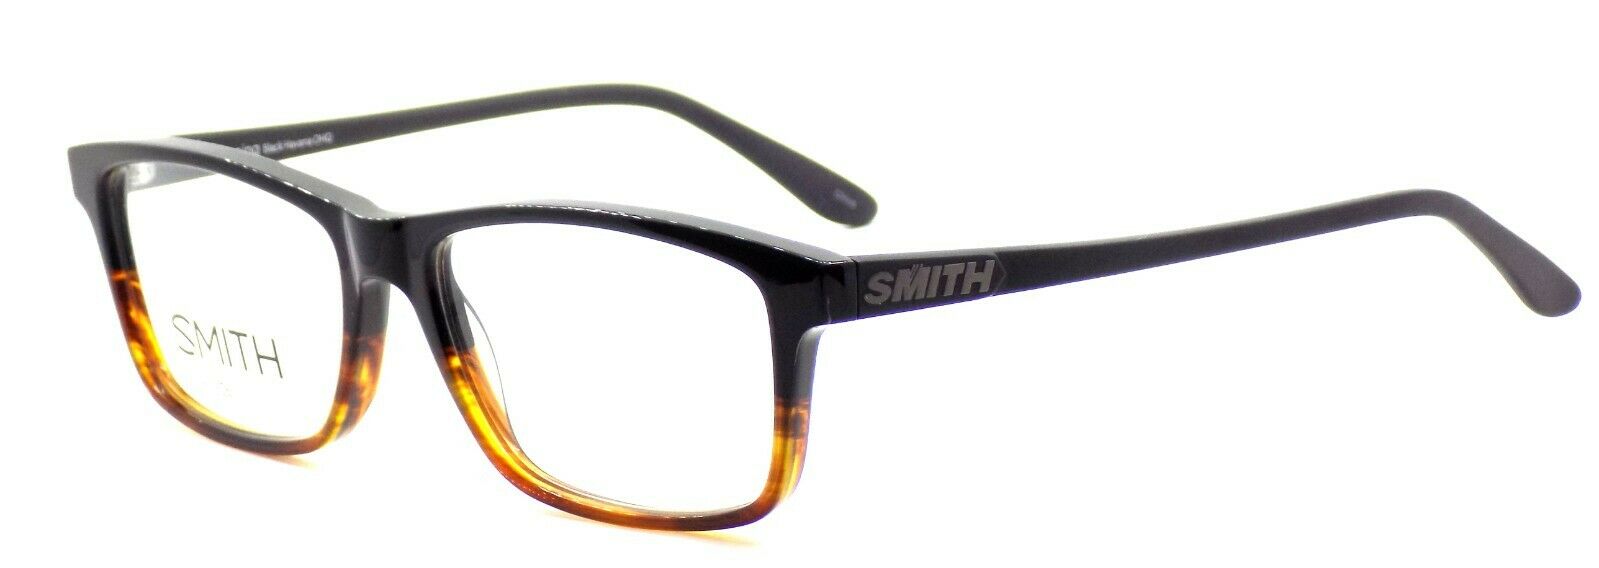 1-SMITH Optics Manning OHQ Men's Eyeglasses Frames 53-16-140 Black Havana + CASE-716737723166-IKSpecs